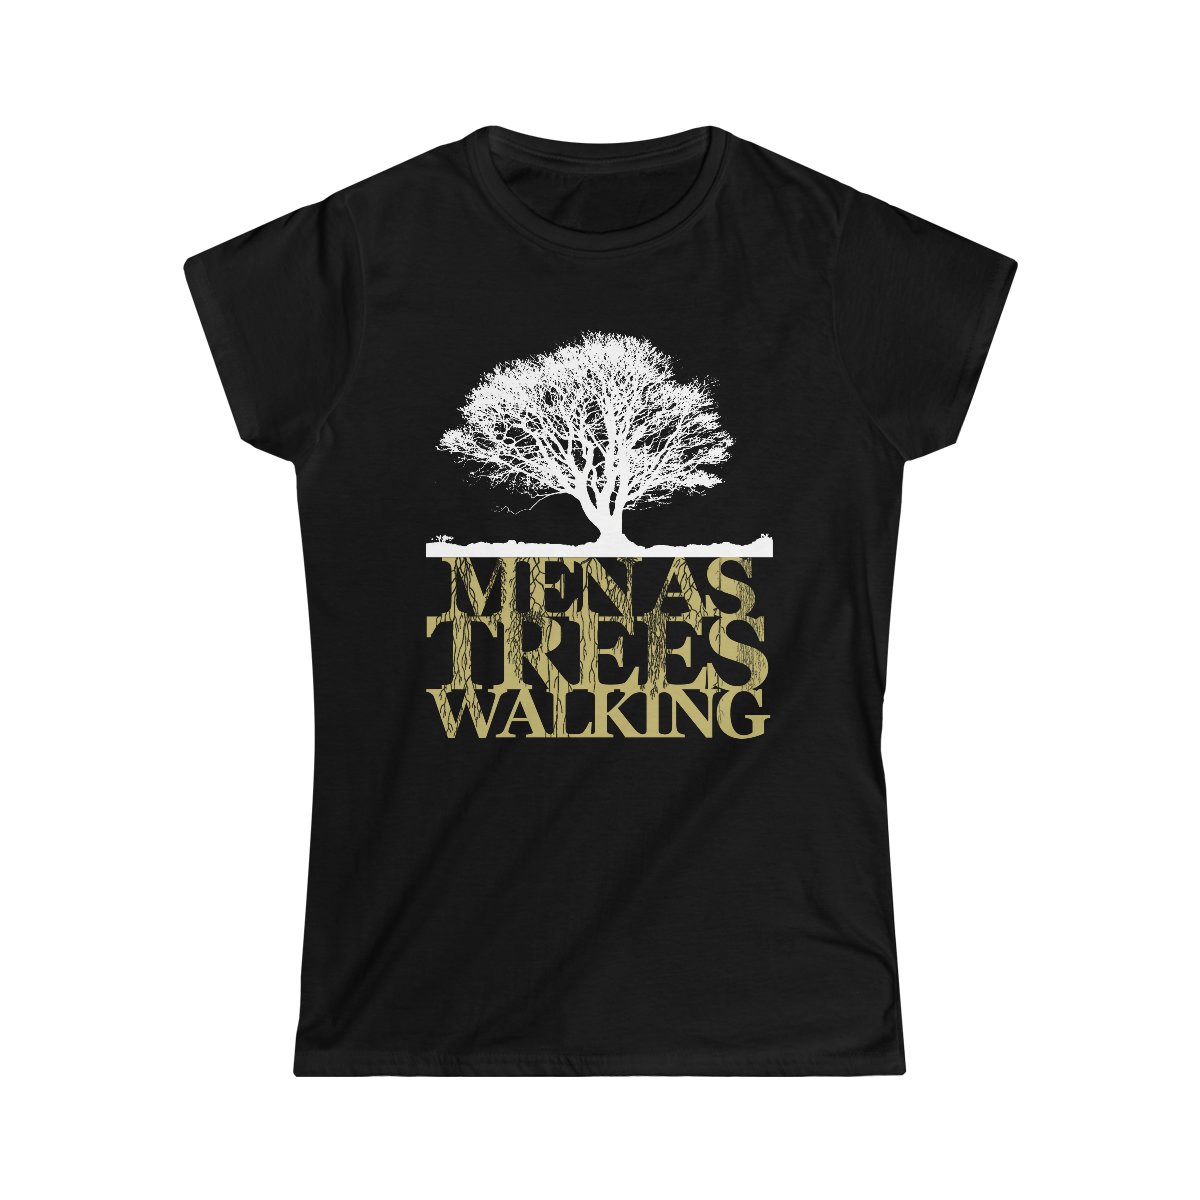 Men As Trees Walking Women’s Short Sleeve Tshirt 64000L